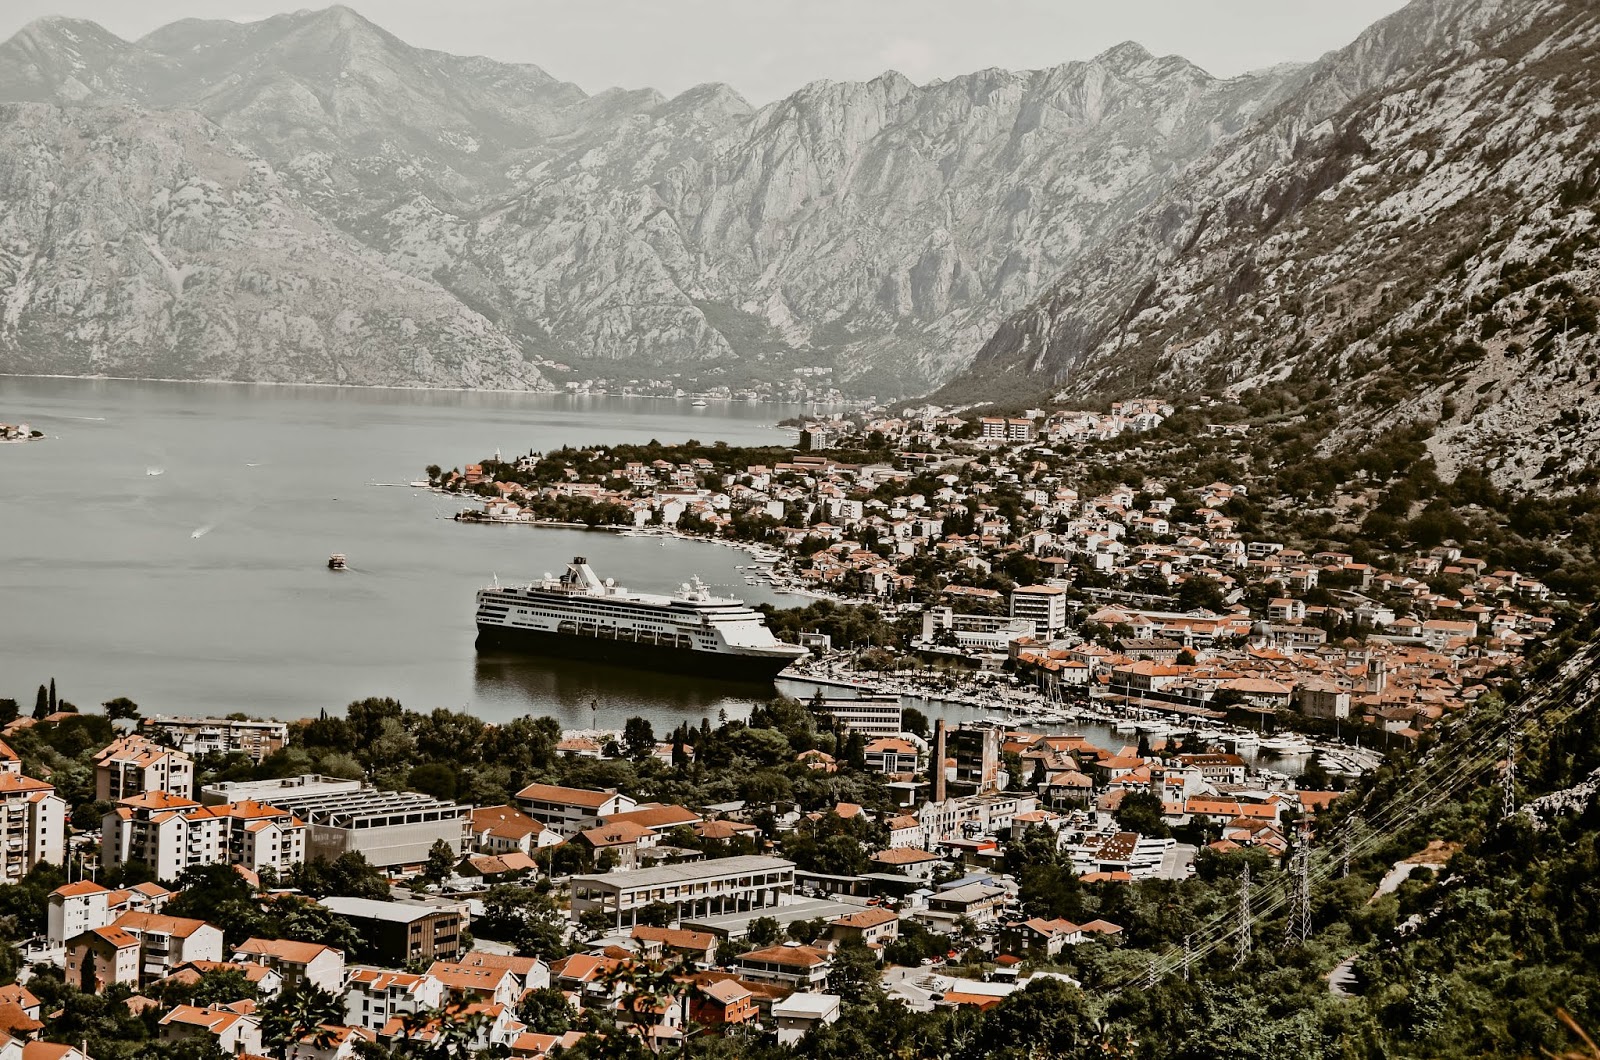 holland-american-cruise-line-ms-veendam-24day-greekodyssey-mediterranean-cruise-Kotor-Montenegro